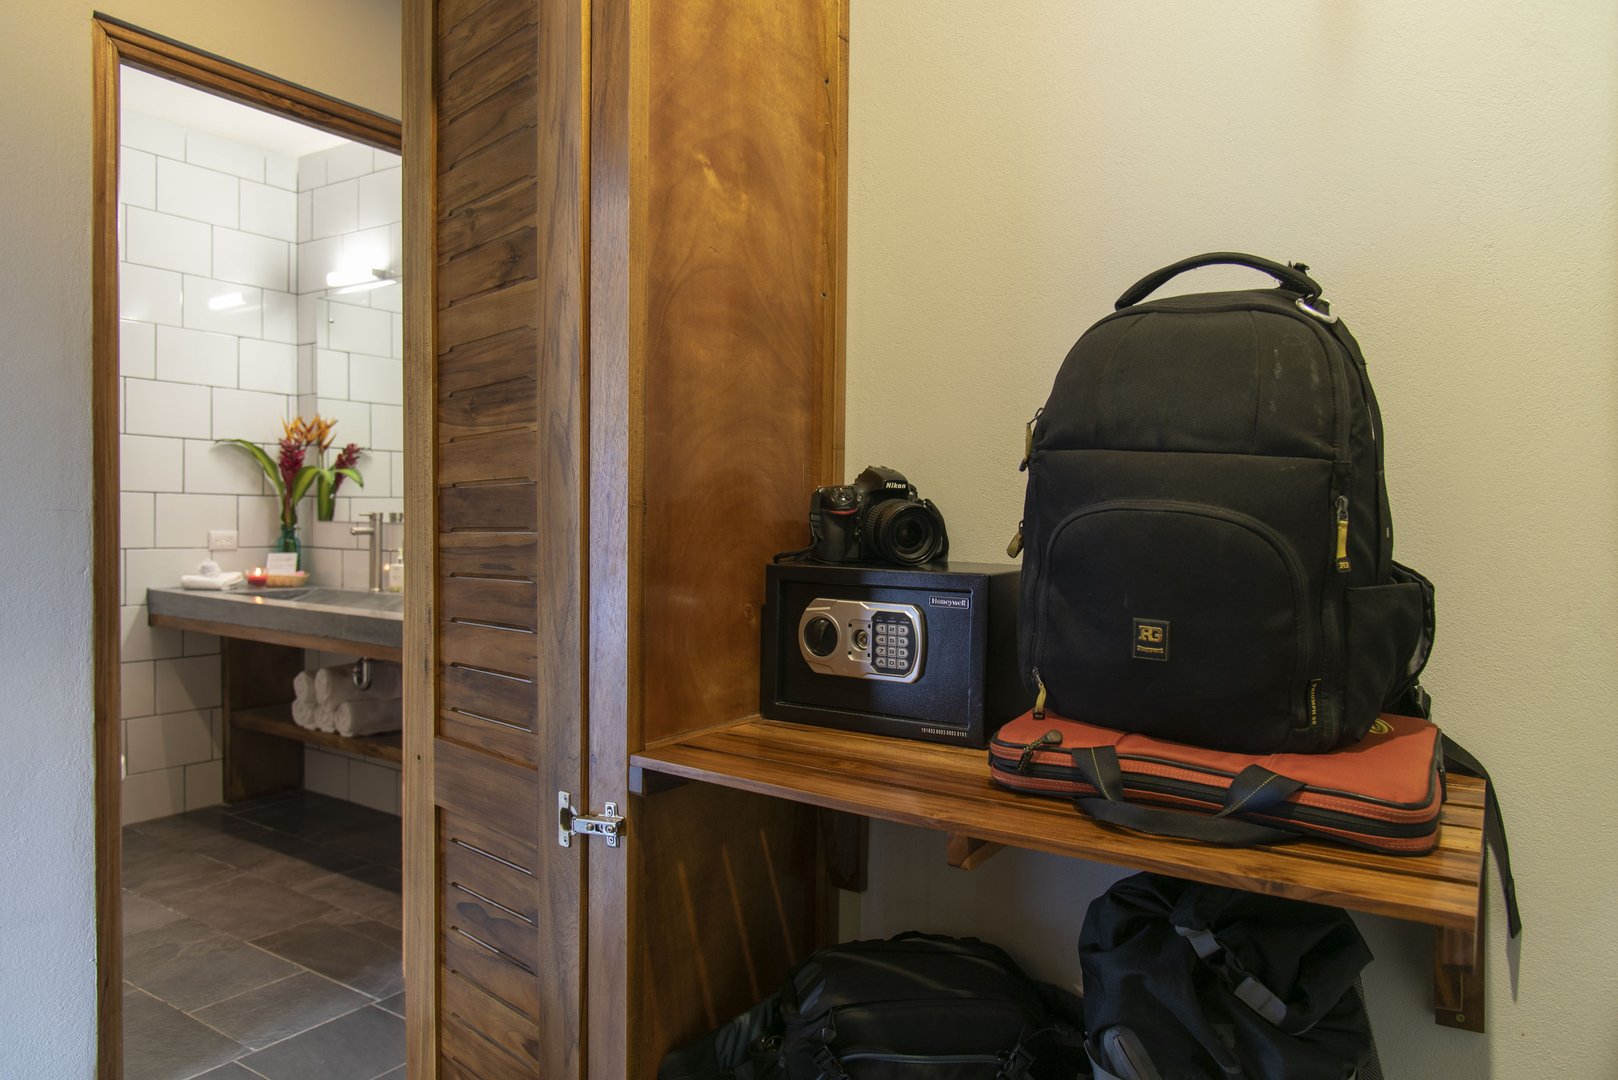 Keep you belongings secure in the built in room safe.